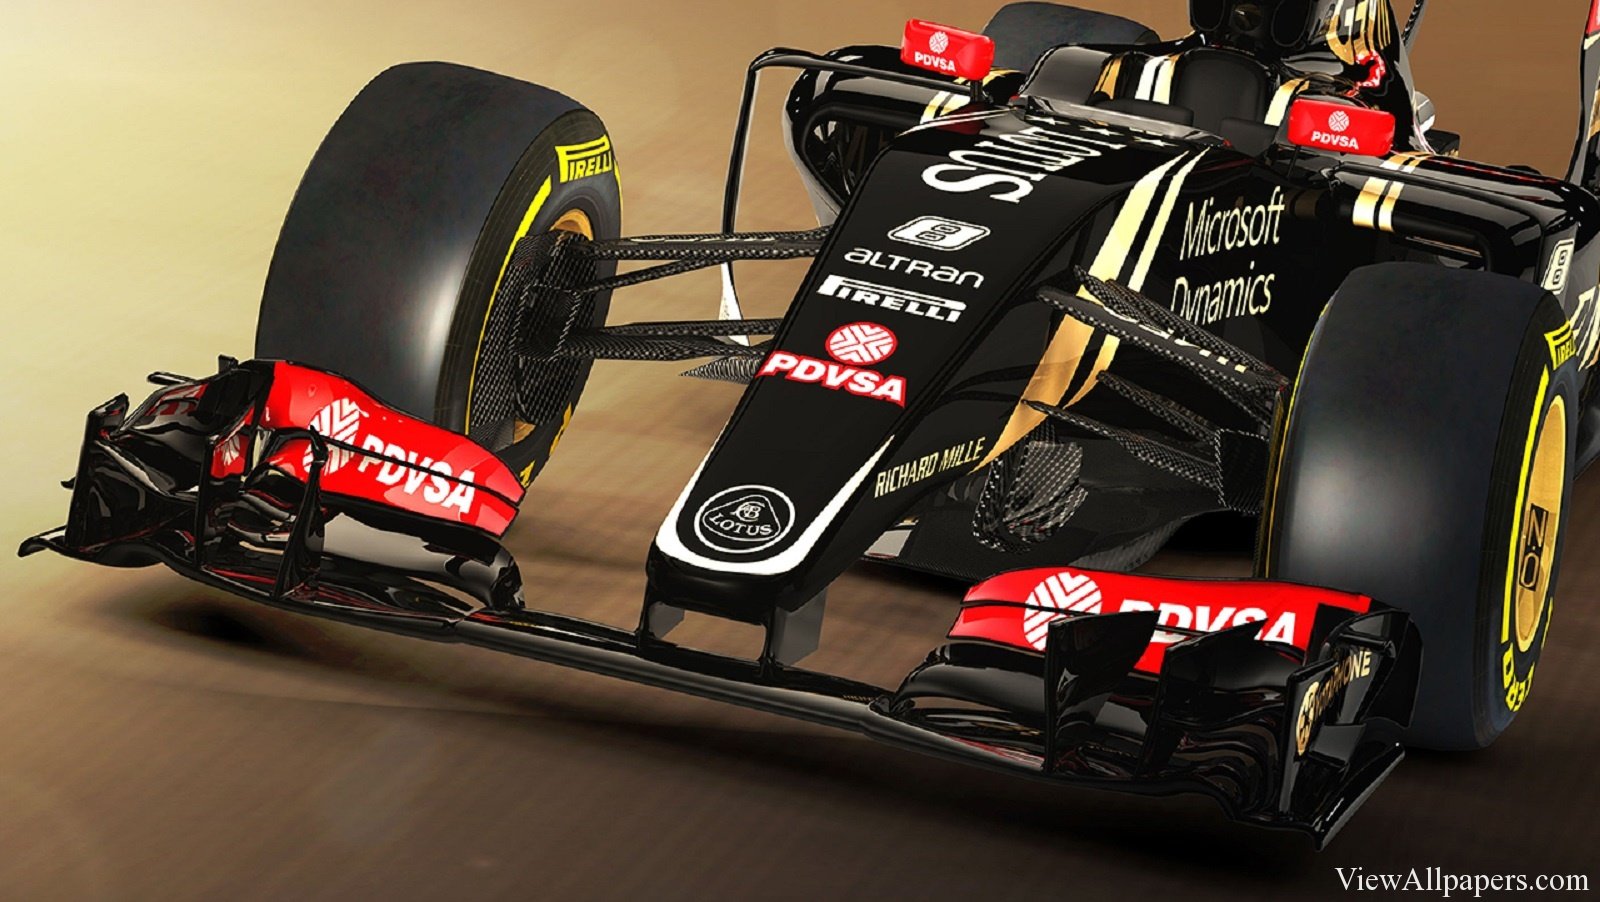 2015 Lotus E23 Formula 1 High Resolution Wallpaper Free download 2015